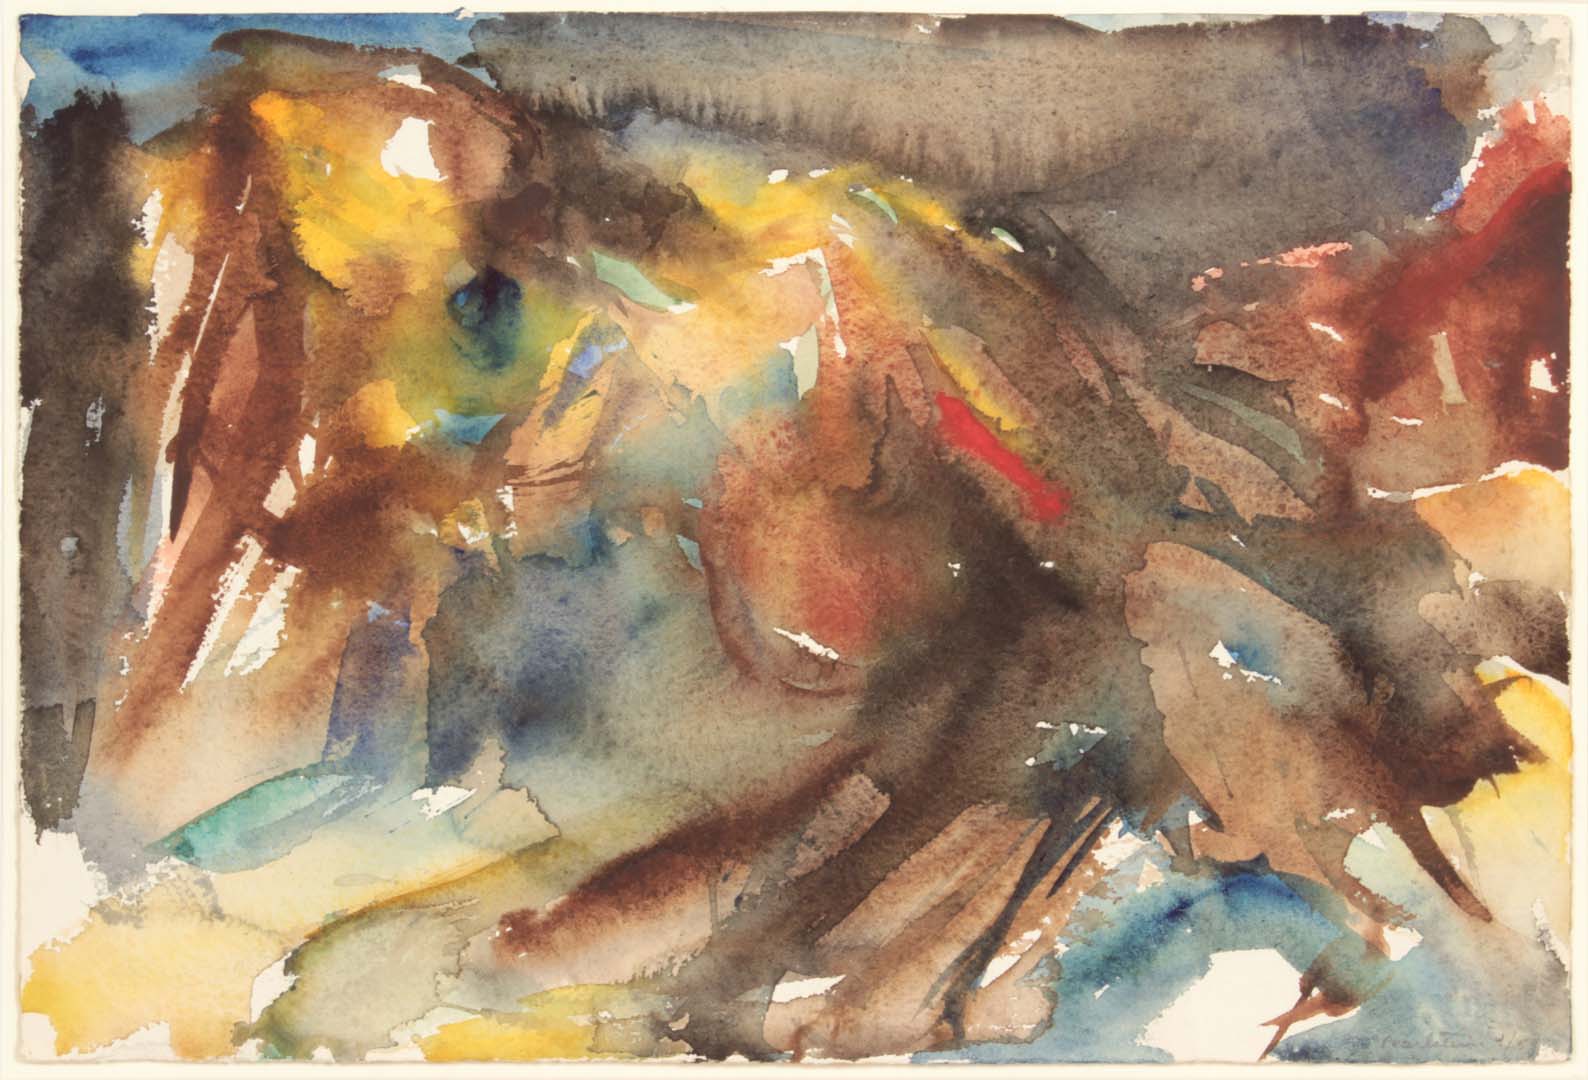 1954 Montauk Rocks #6 Watercolor on Paper 9.875 x 14.875